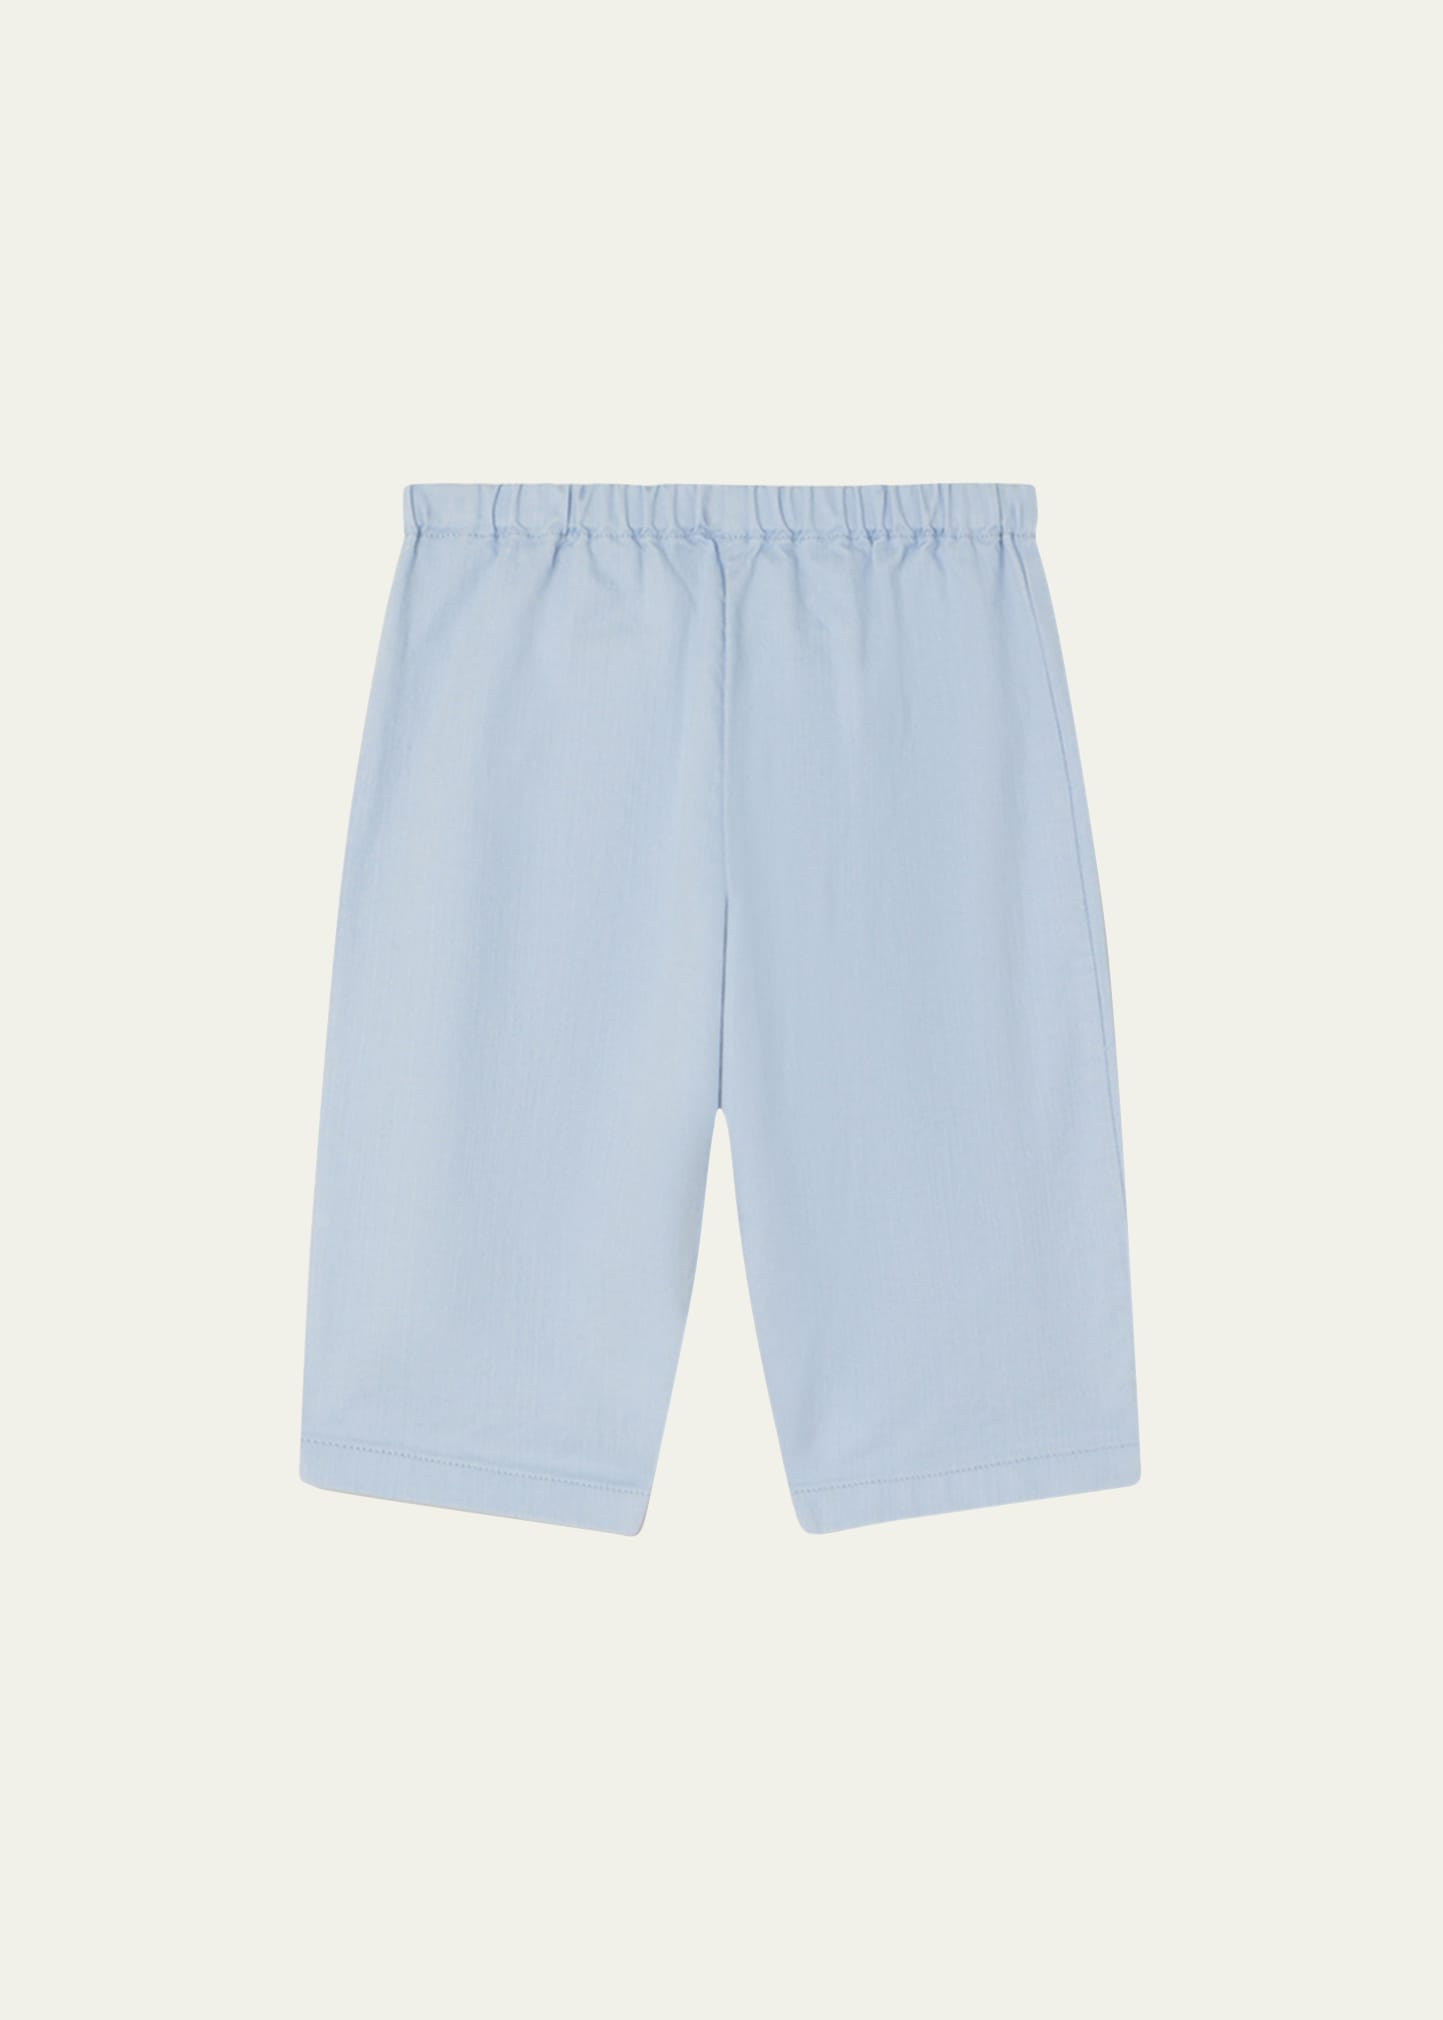 Bonpoint Boy's Bady Cotton Shorts, Size 6M-18M